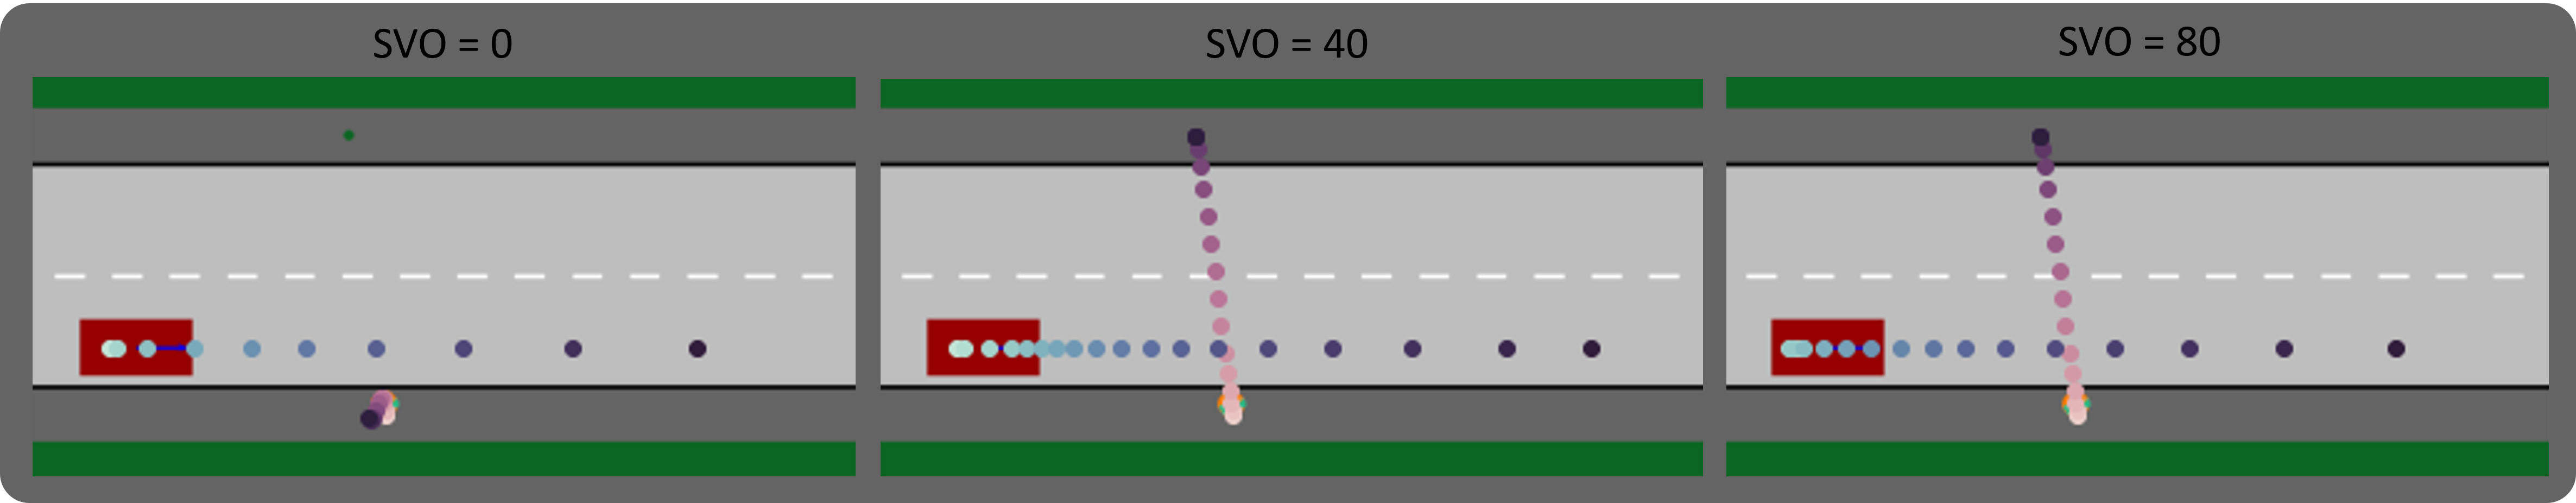 Human-centric Autonomous Driving in an AV-Pedestrian Interactive Environment Using SVO